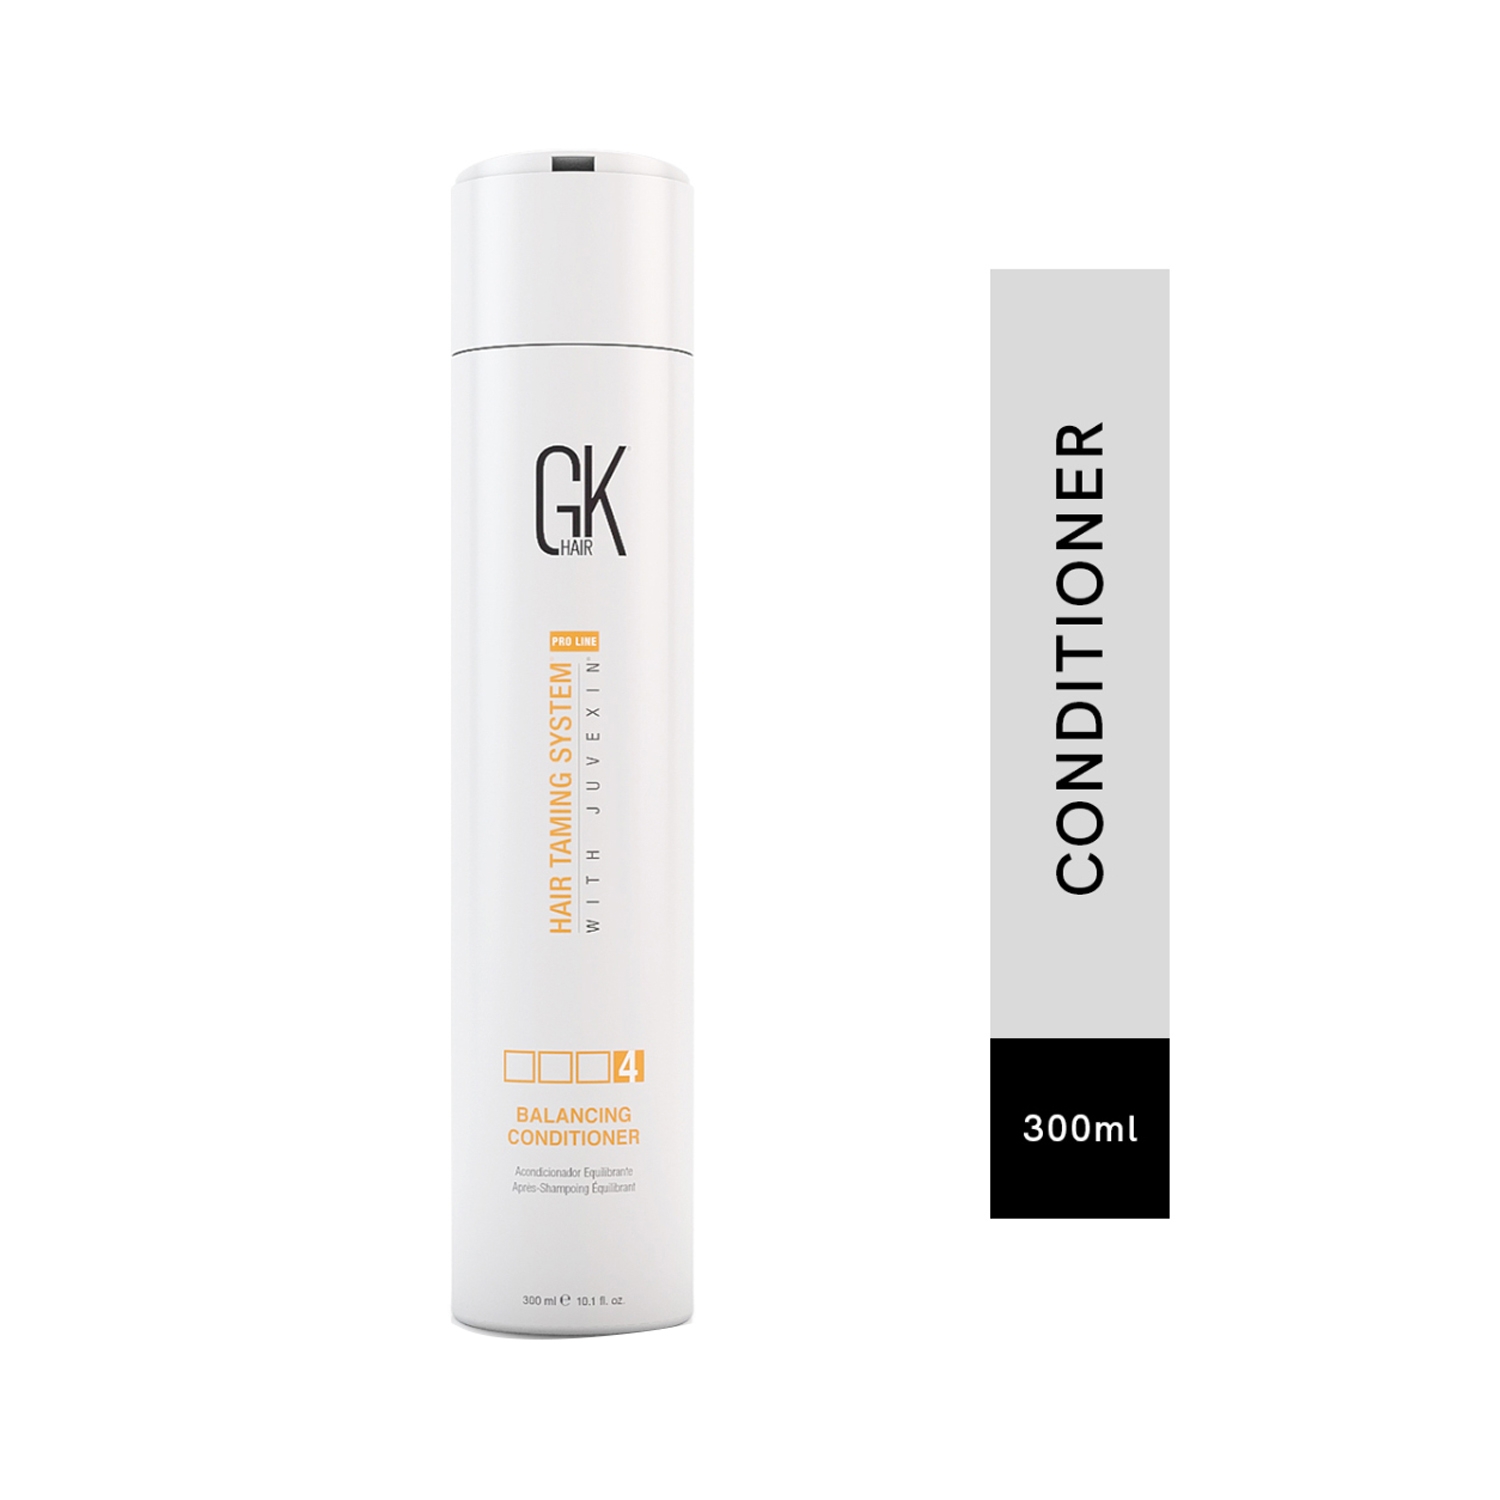 GK Hair | GK Hair Balancing Conditioner (300ml)